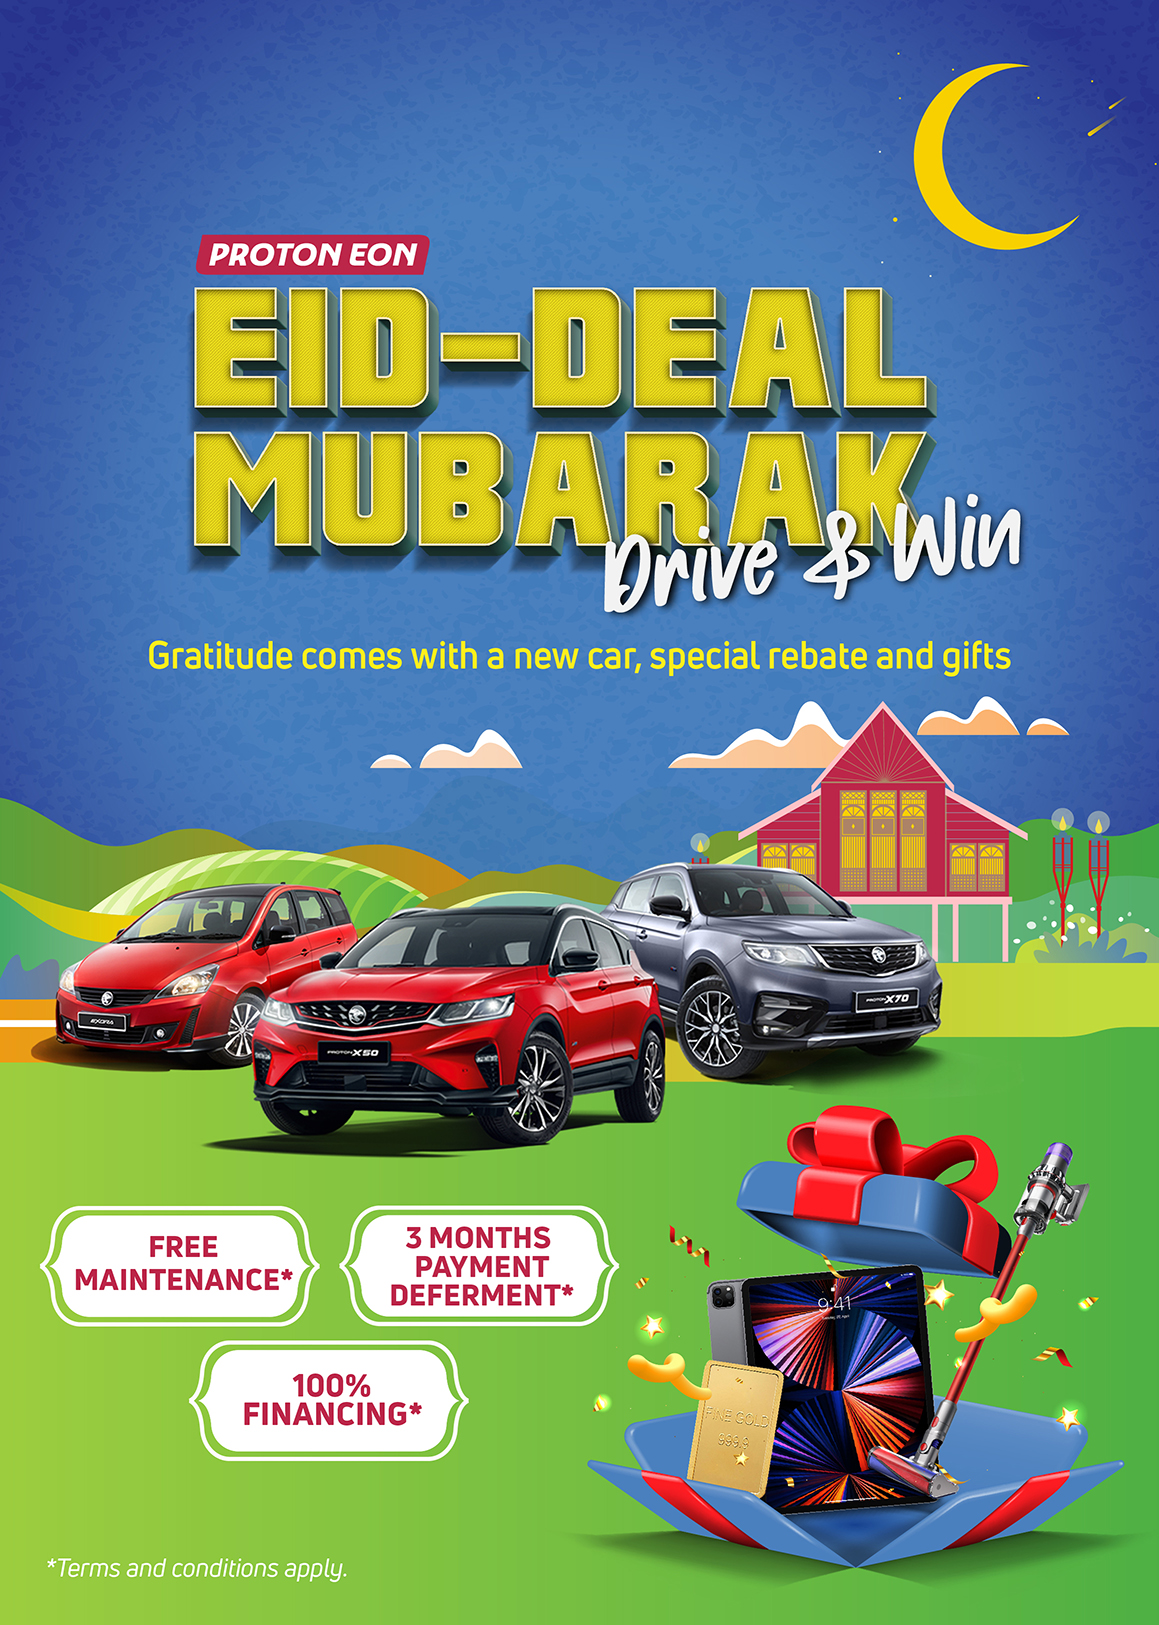 Eid-Deal Mubarak - Drive & Win